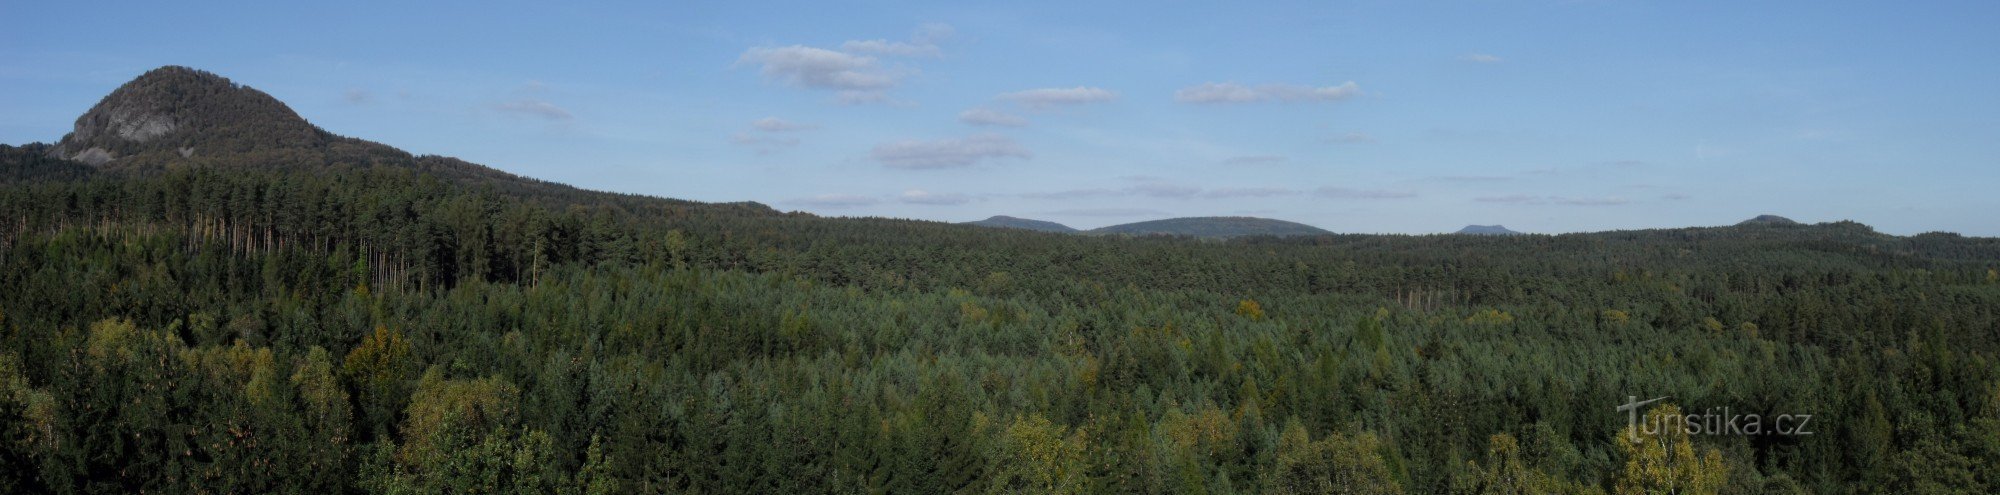 Panorama von Jelení skop